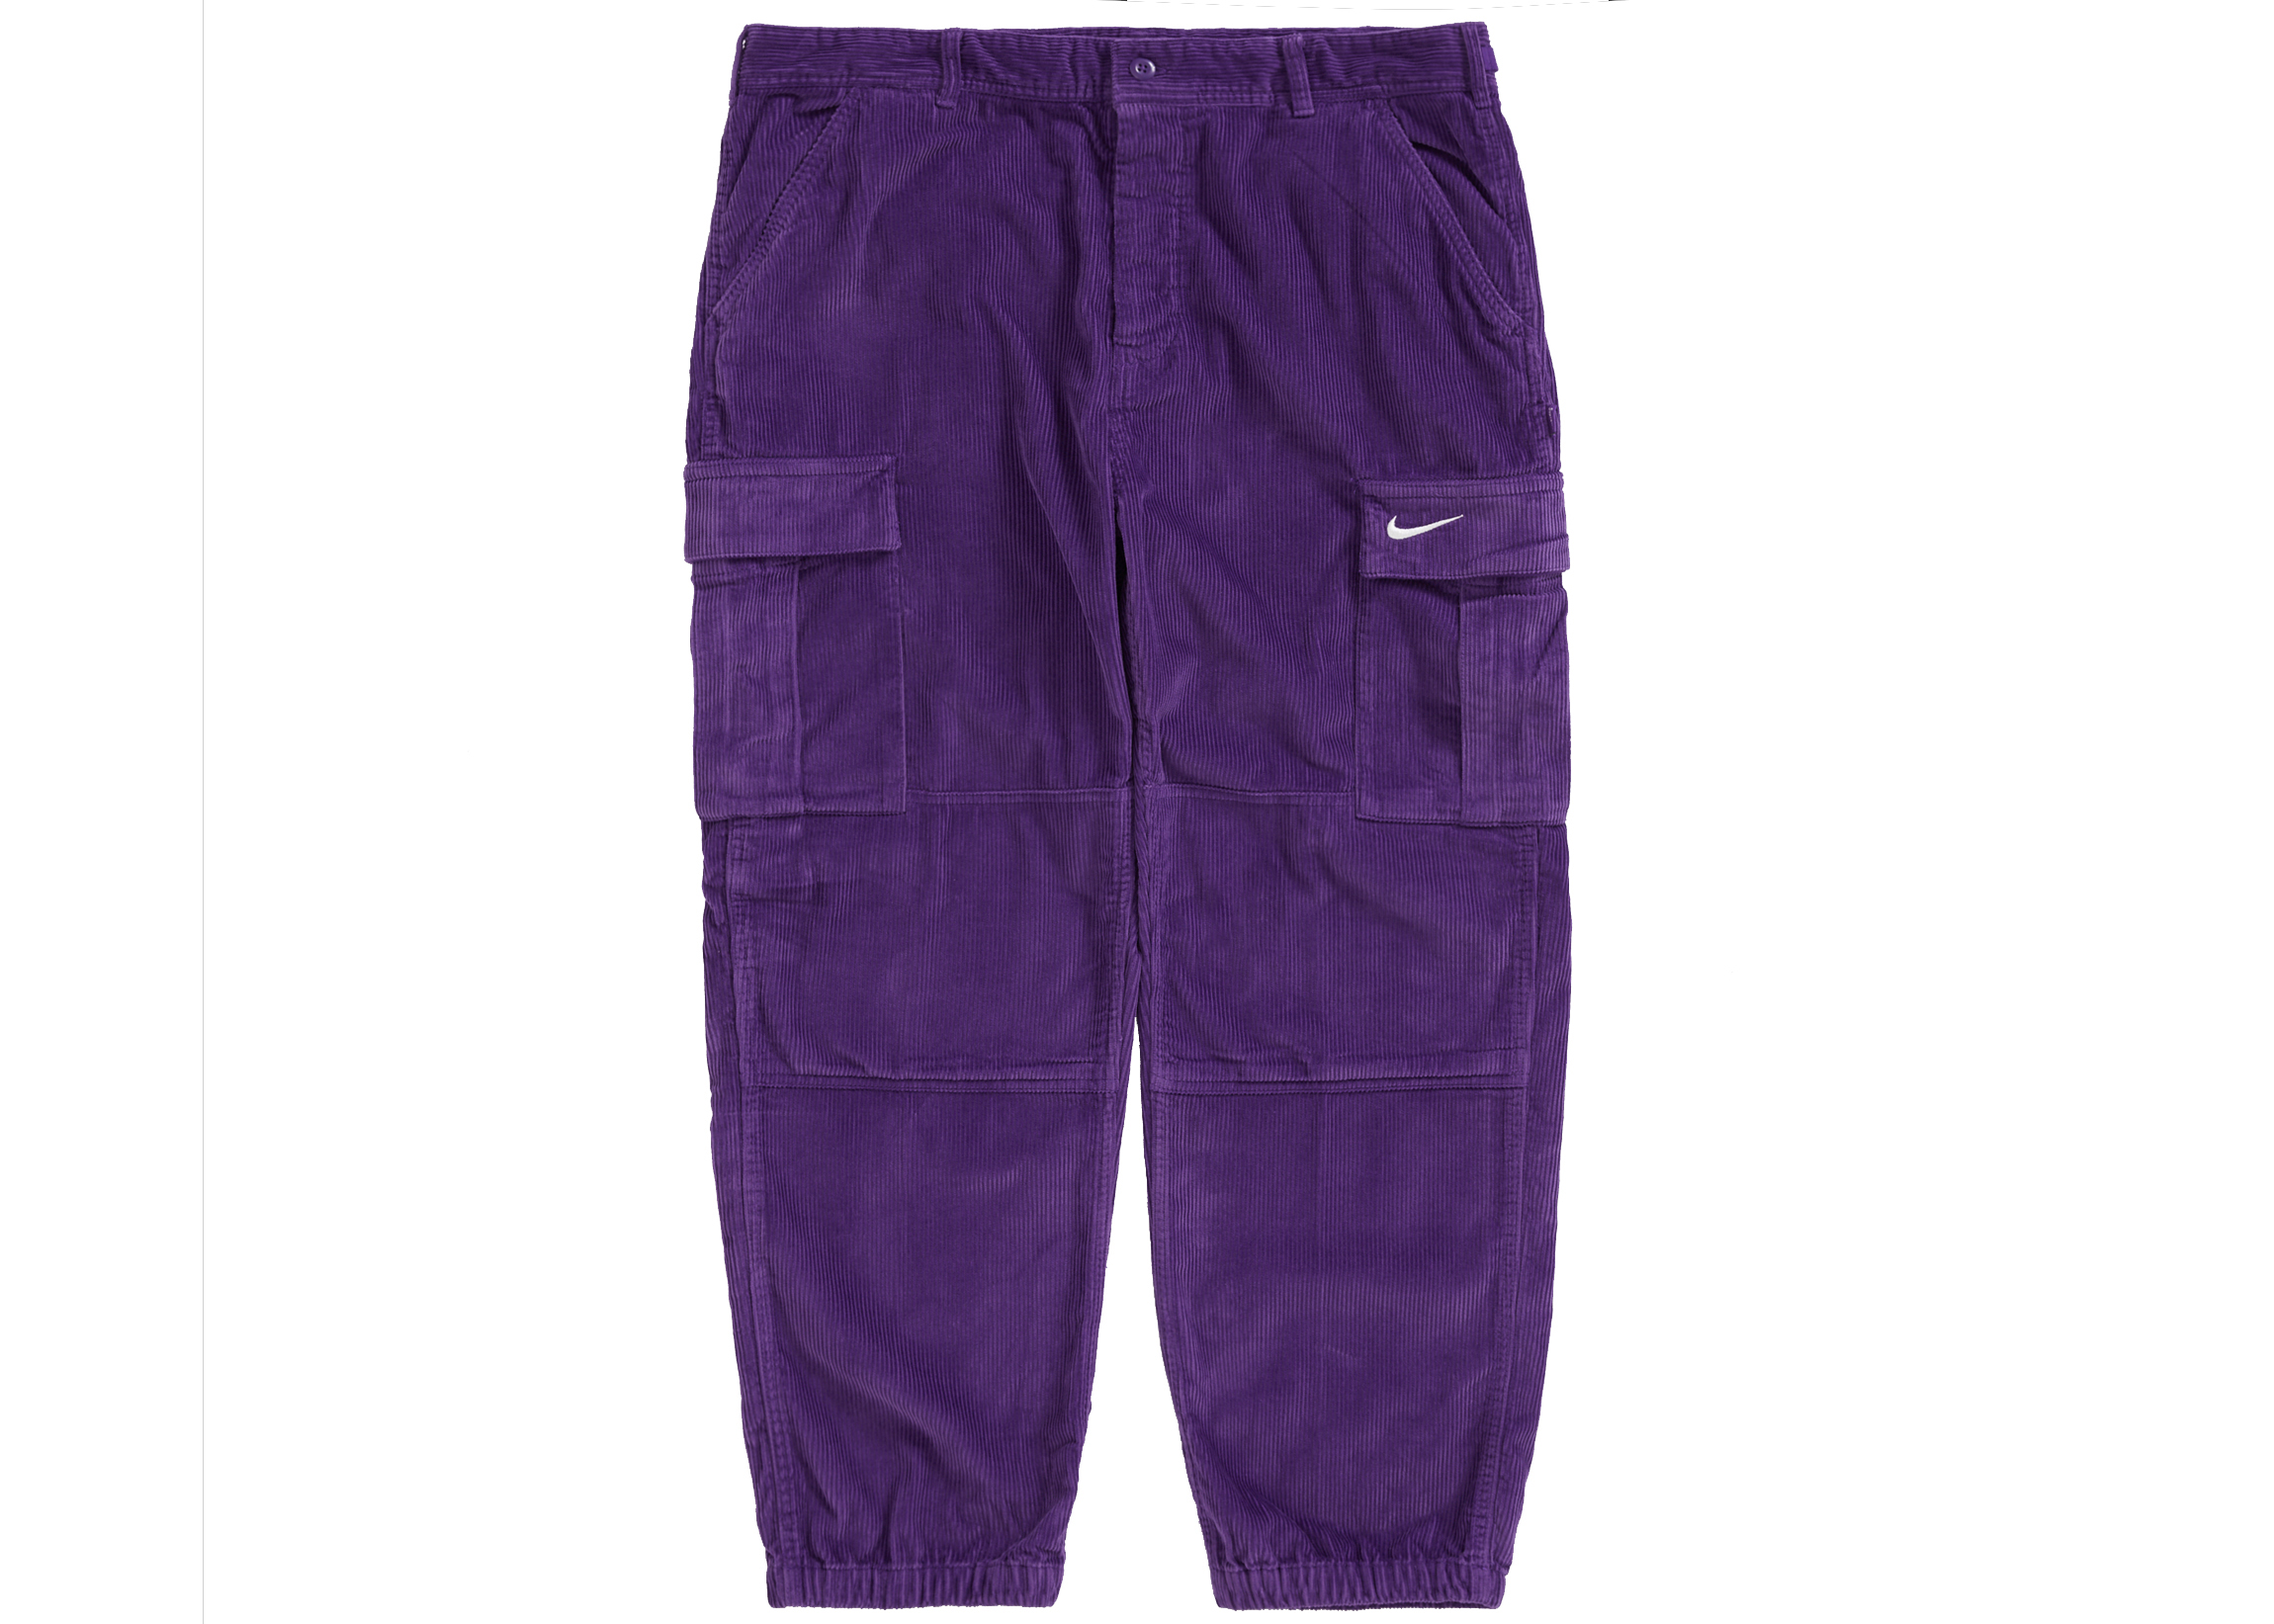 supreme×NIKE corduroy pants ワークパンツ/カーゴパンツ パンツ メンズ 売上超安い